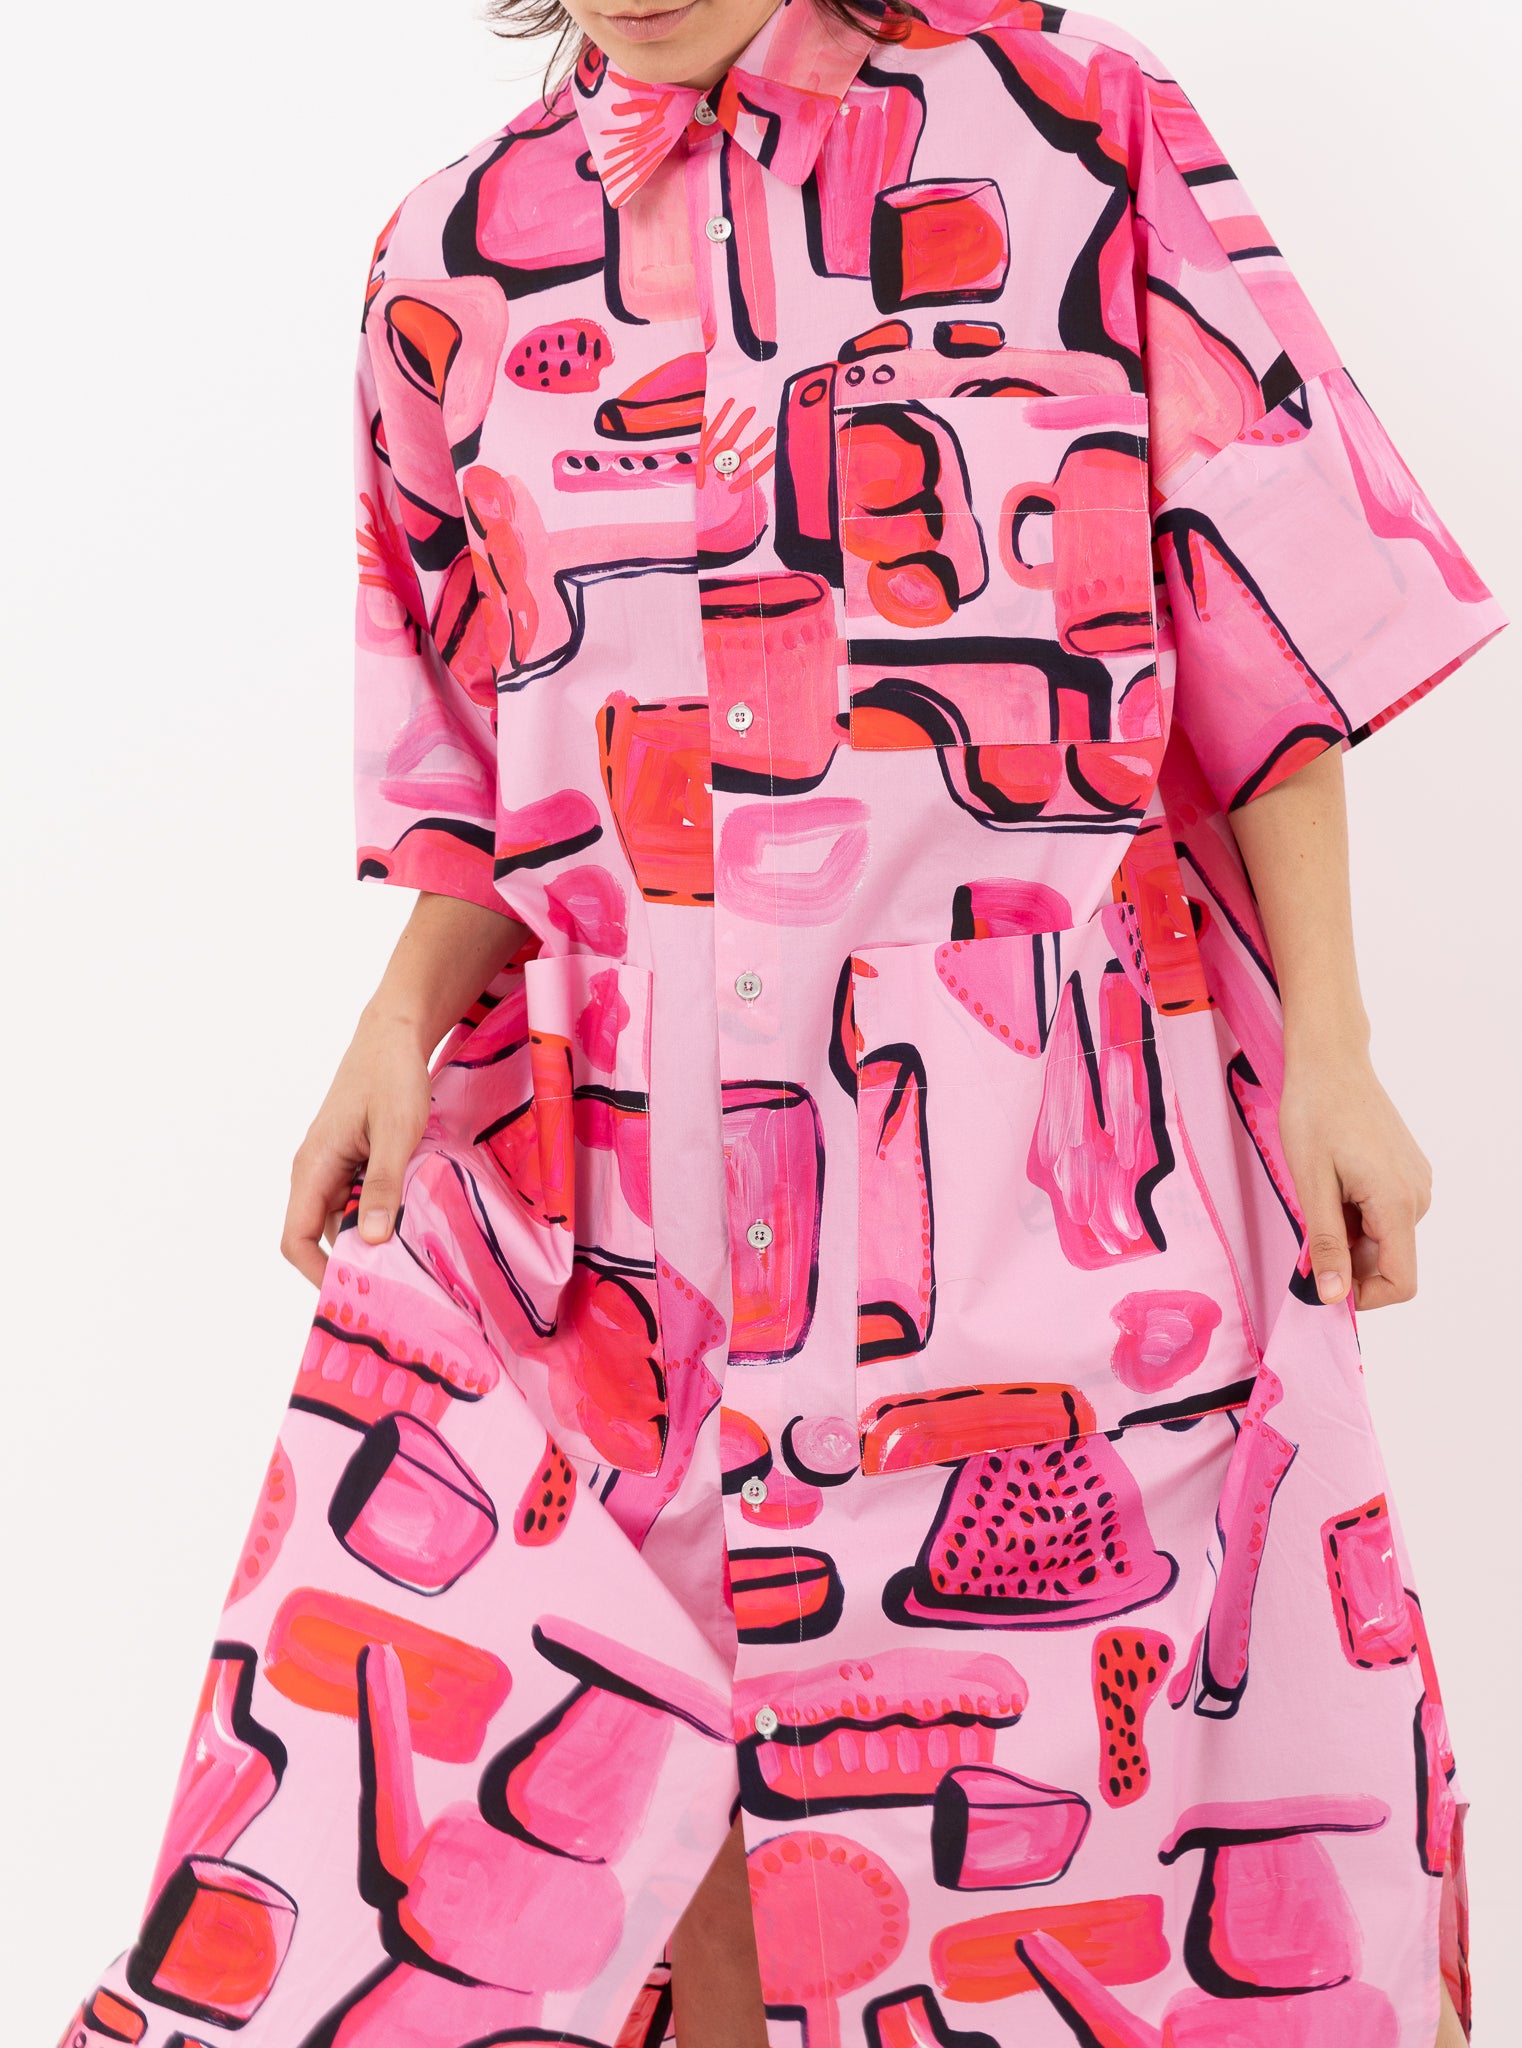 Toogood Tinker Dress, Pink Print - Worthwhile, Inc.